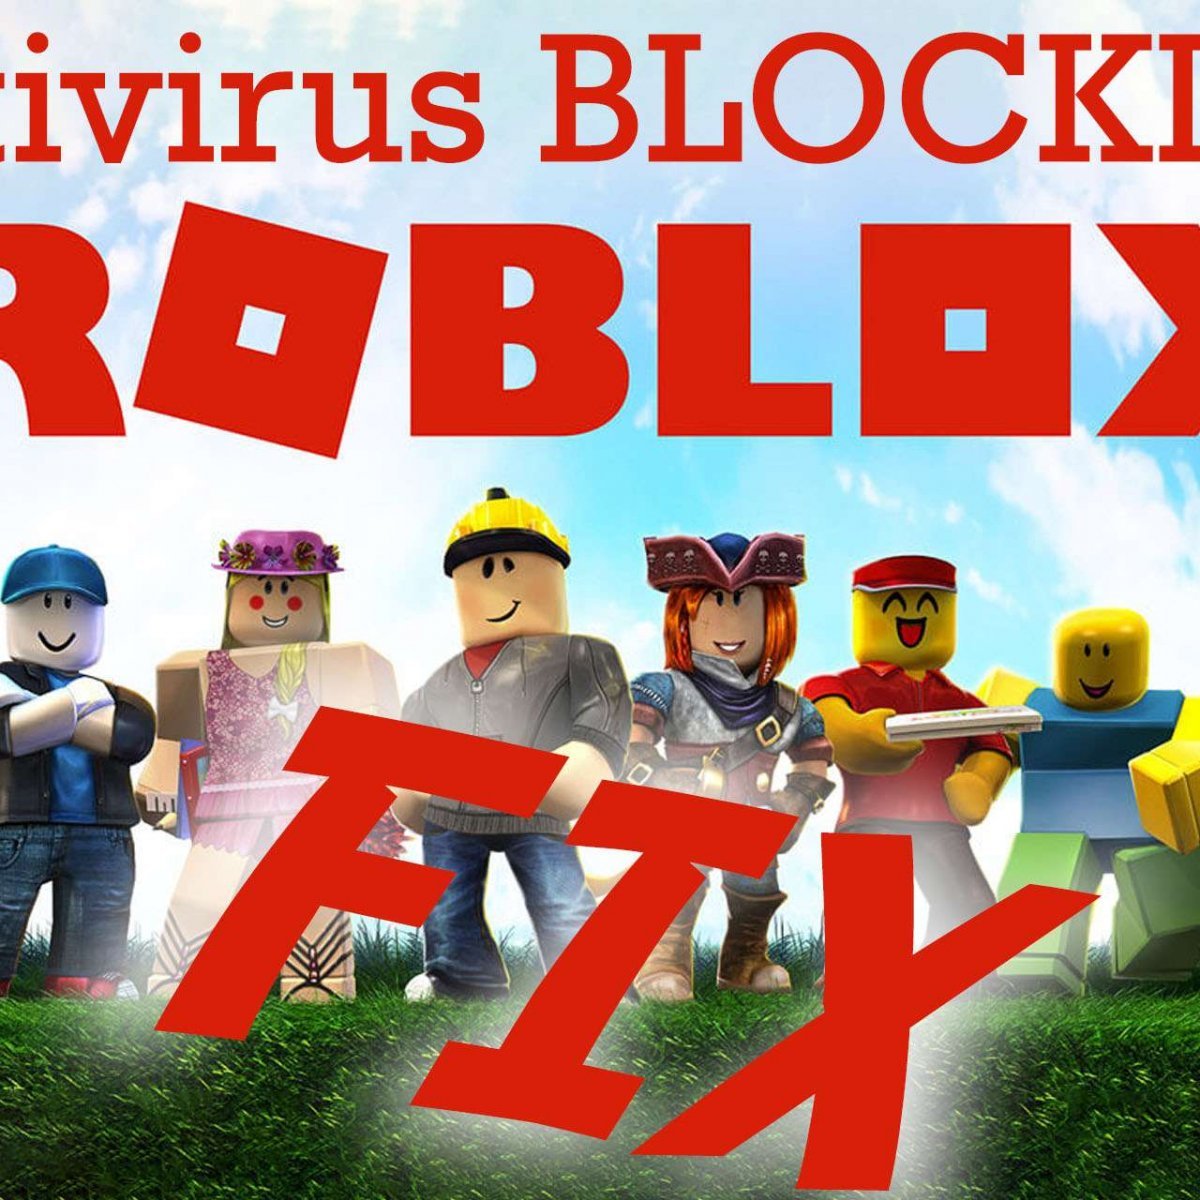 Fix Antivirus Blocking Roblox In Windows 10